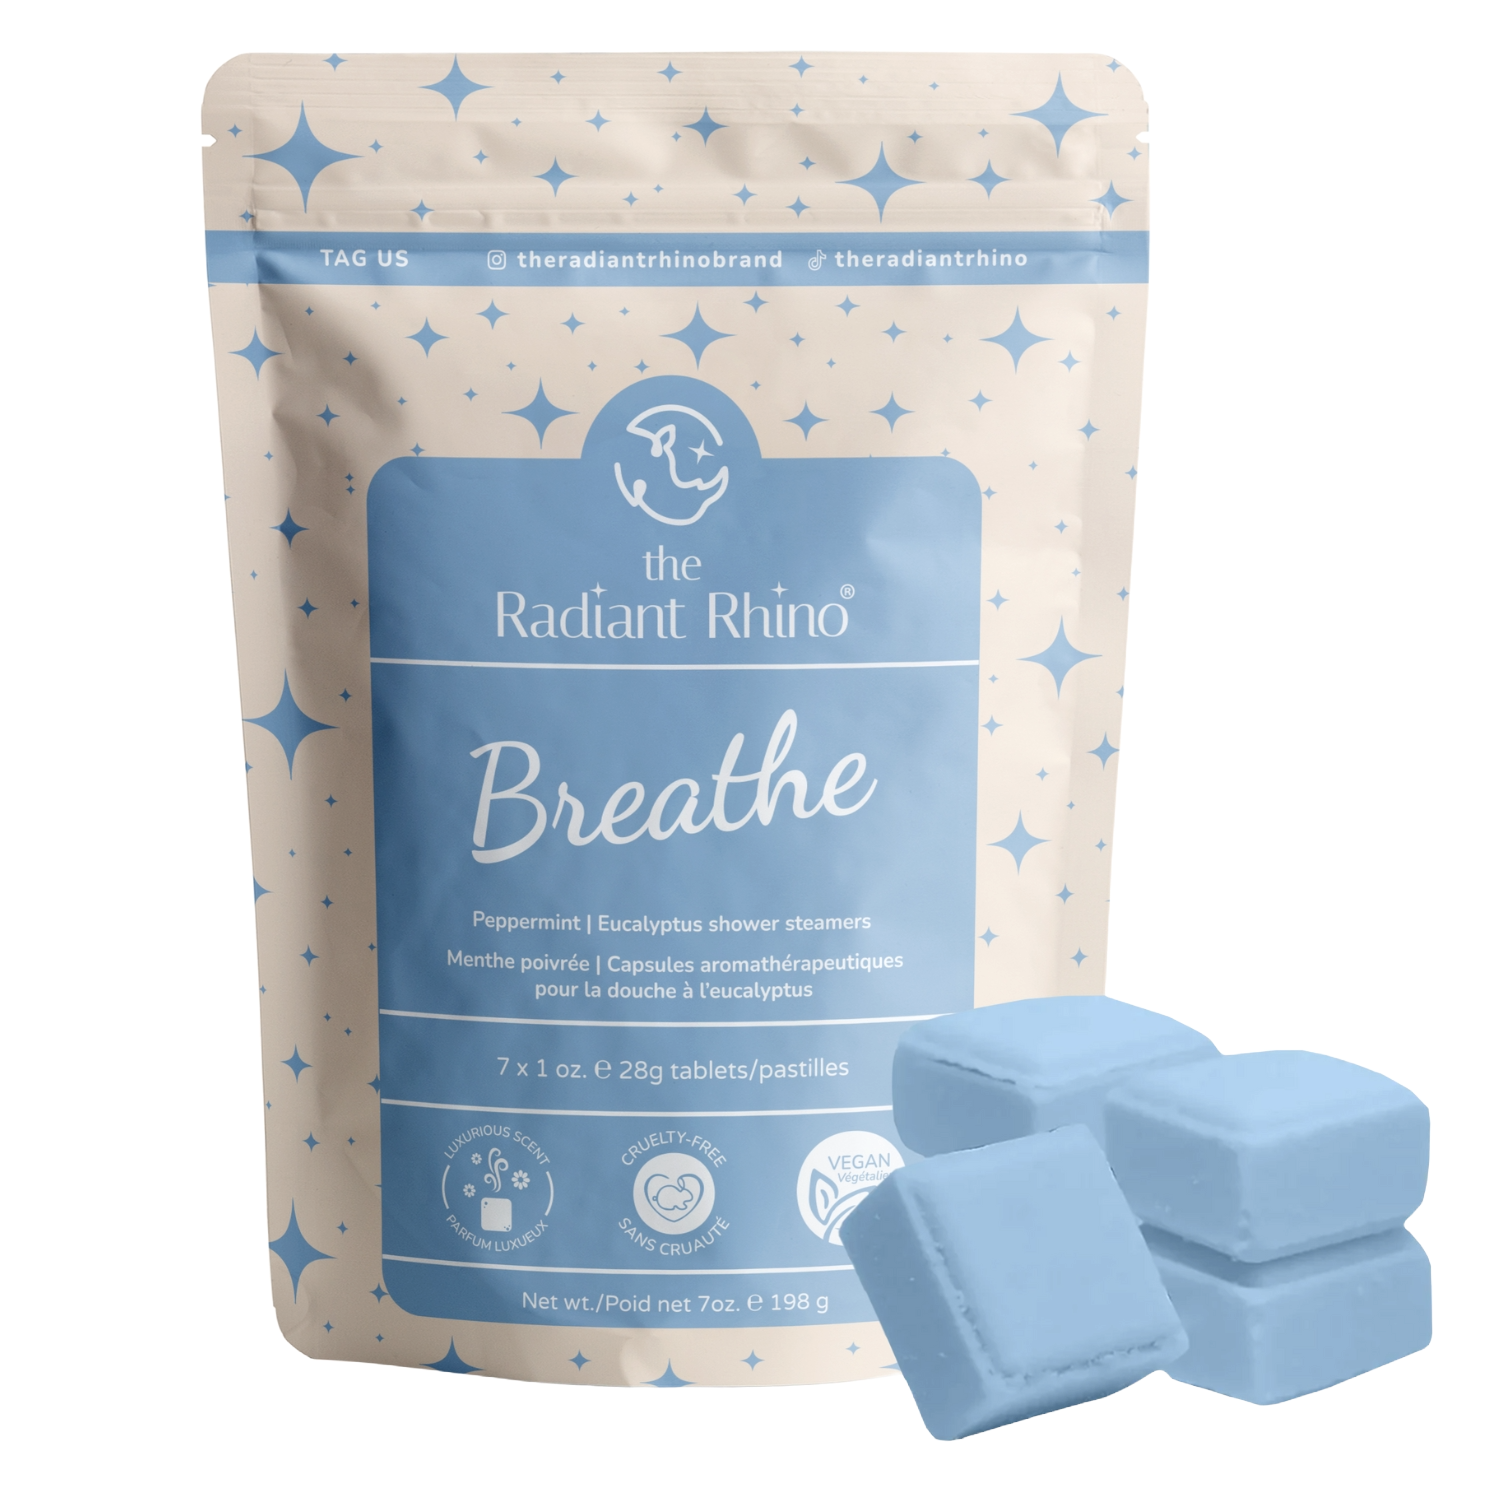 Breathe: Peppermint + Eucalyptus Shower Steamers